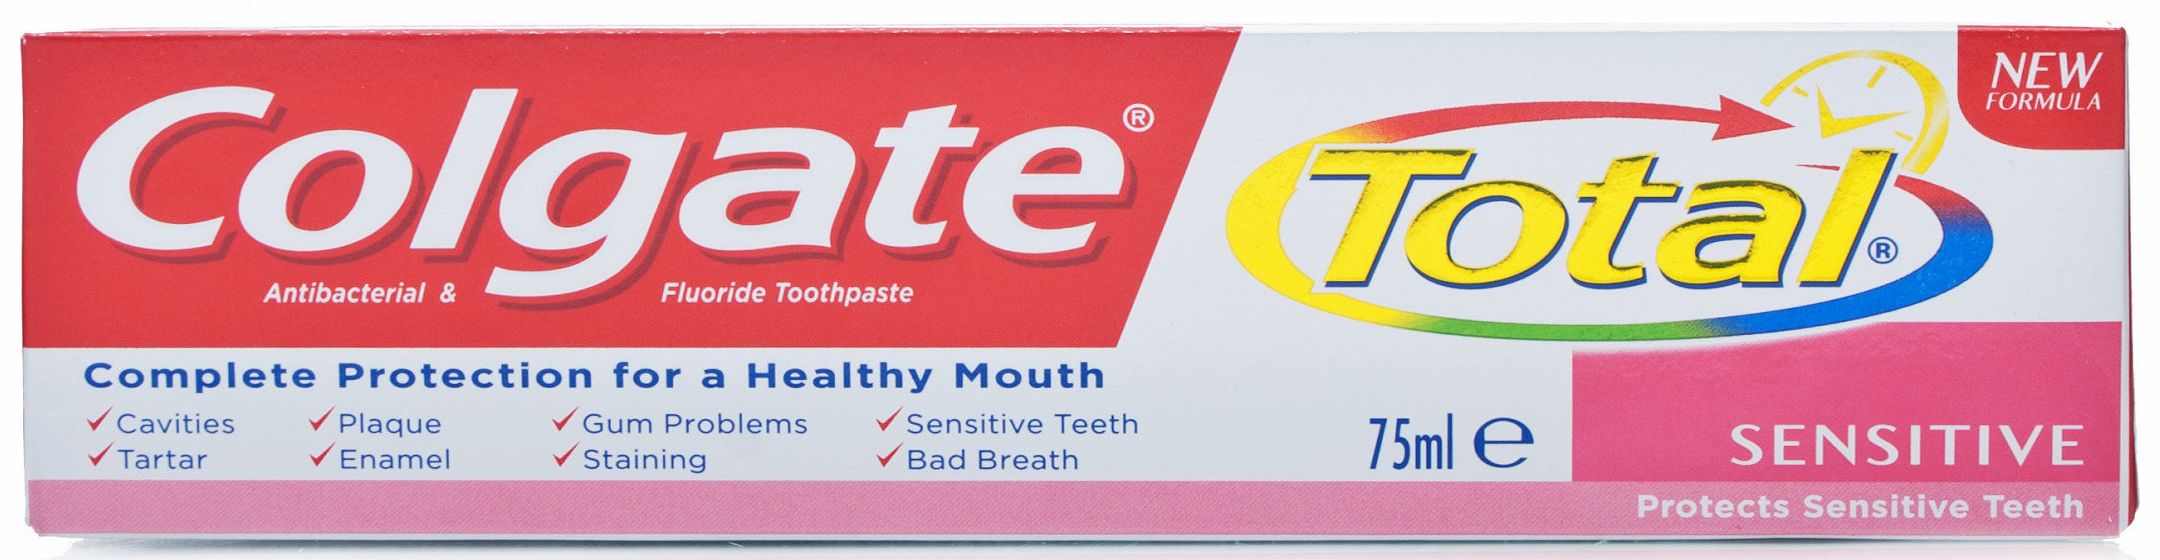 Colgate Total Sensitive Toothpaste